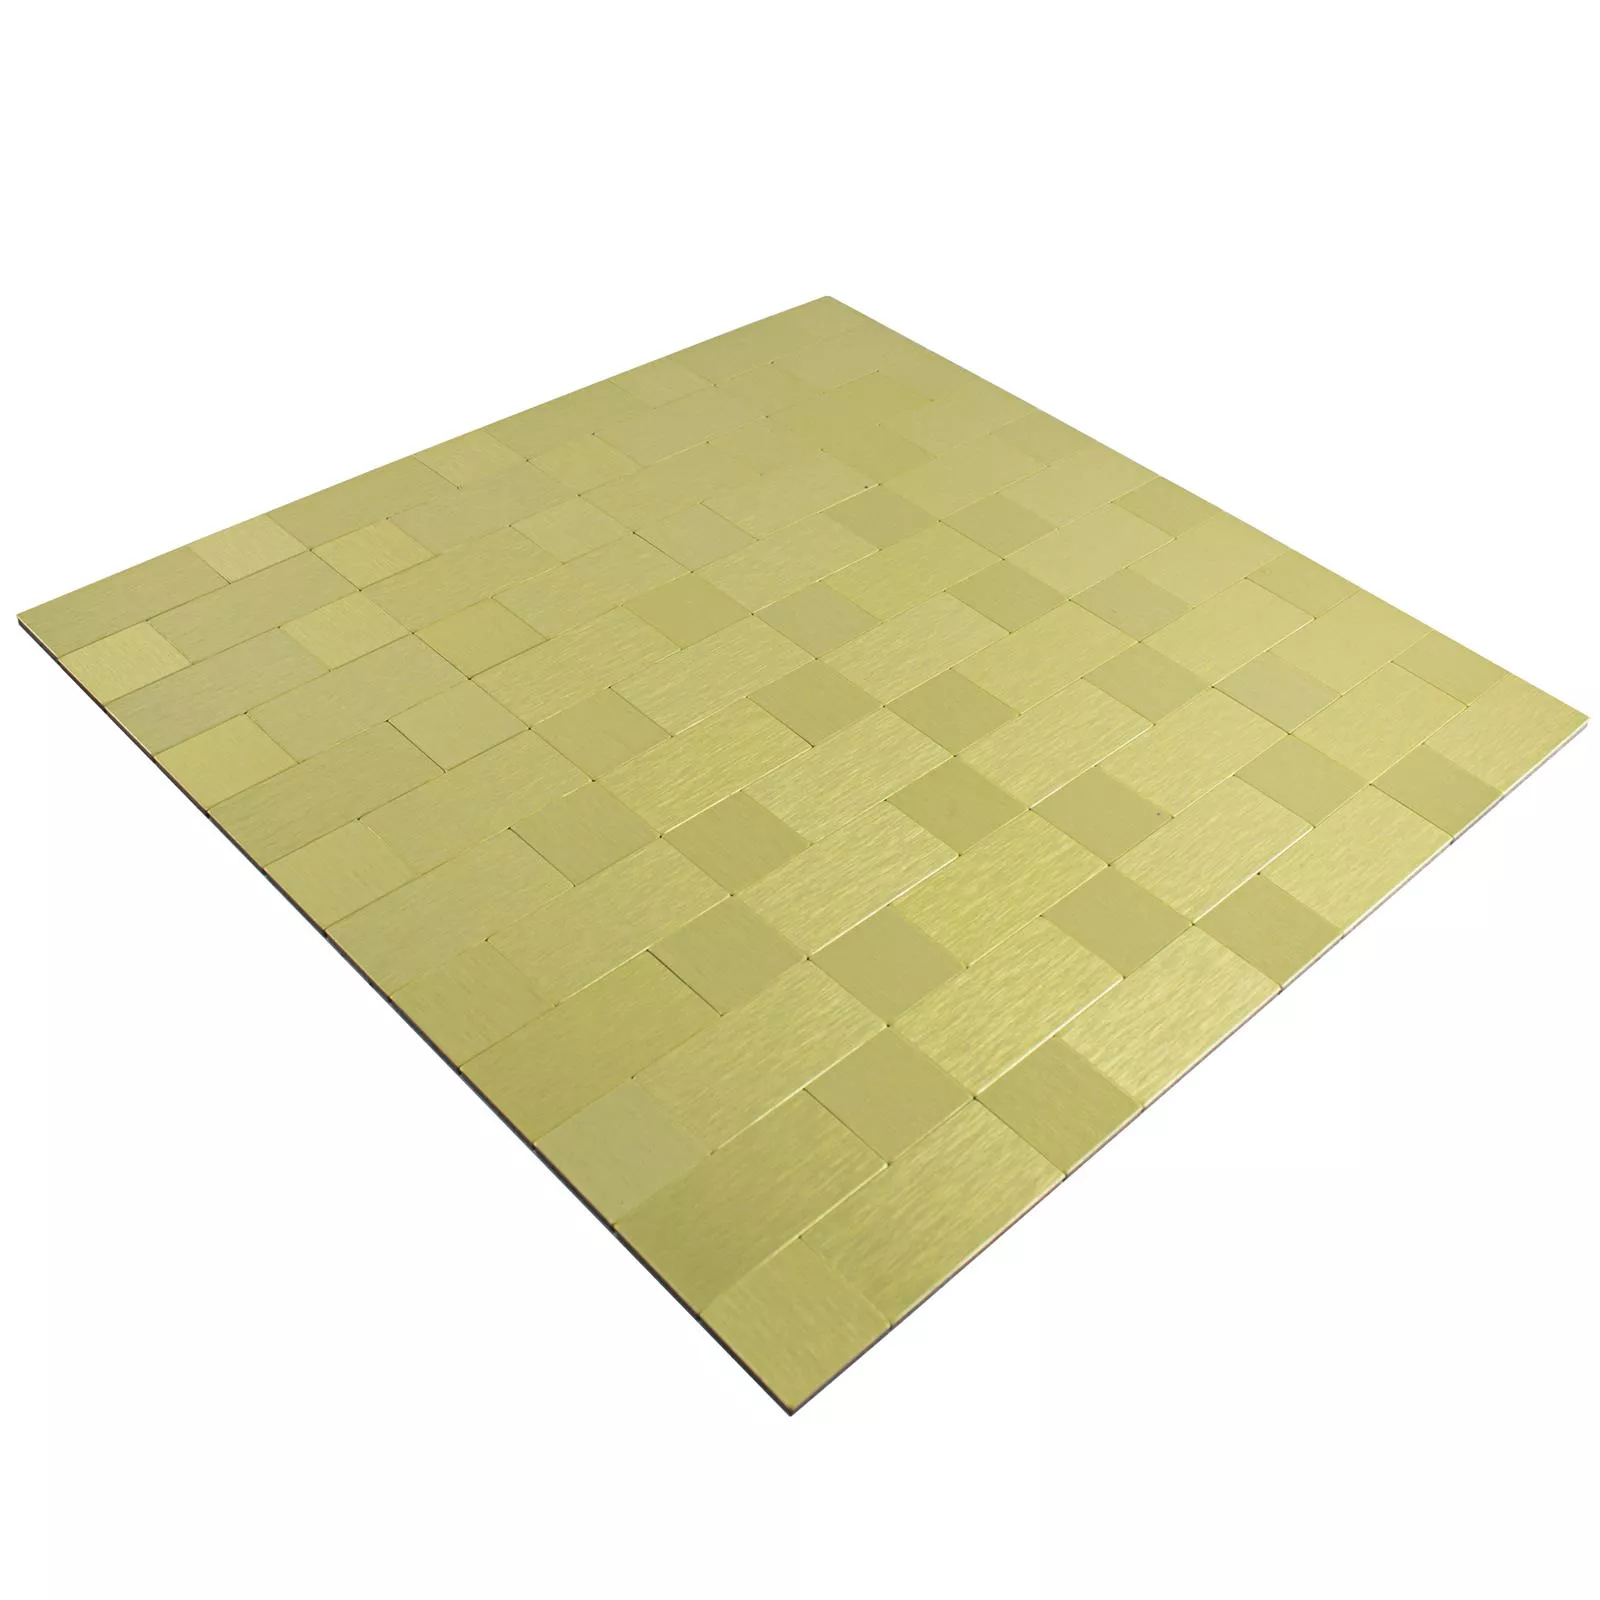 Sample from Mosaic Tiles Metal Self Adhesive Vryburg Gold Combi